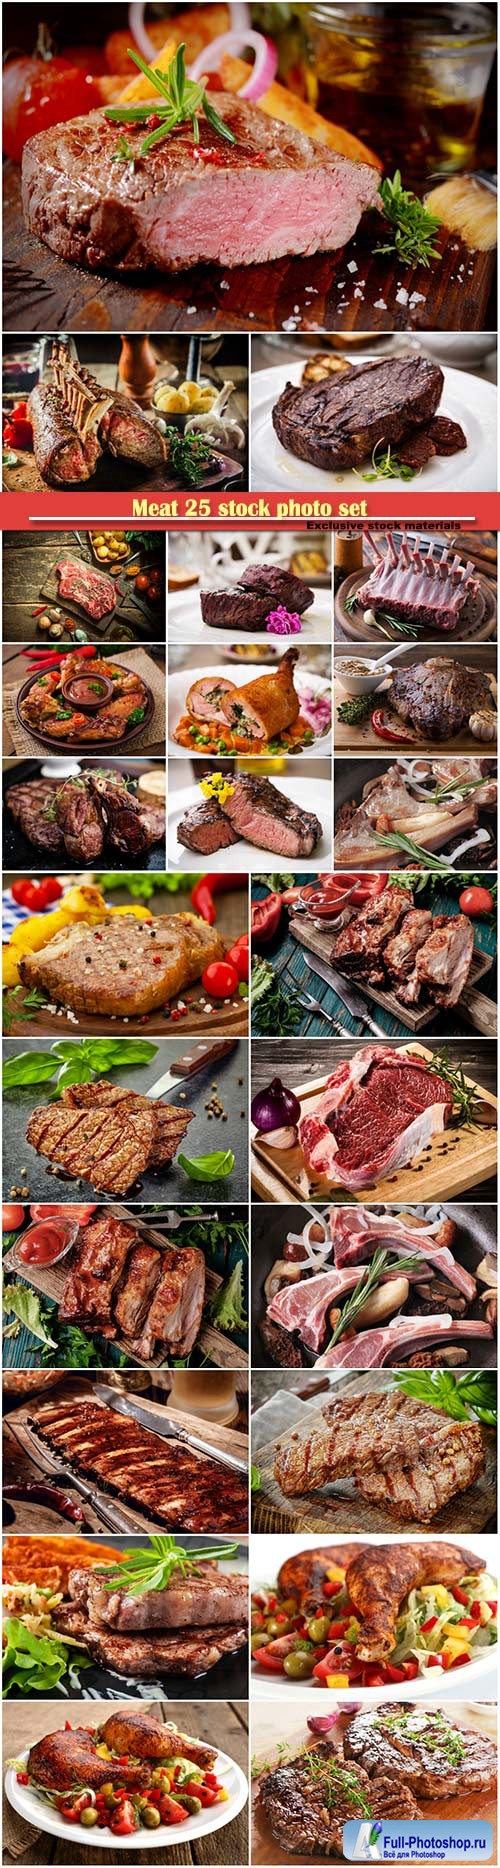 Meat 25 stock photo set